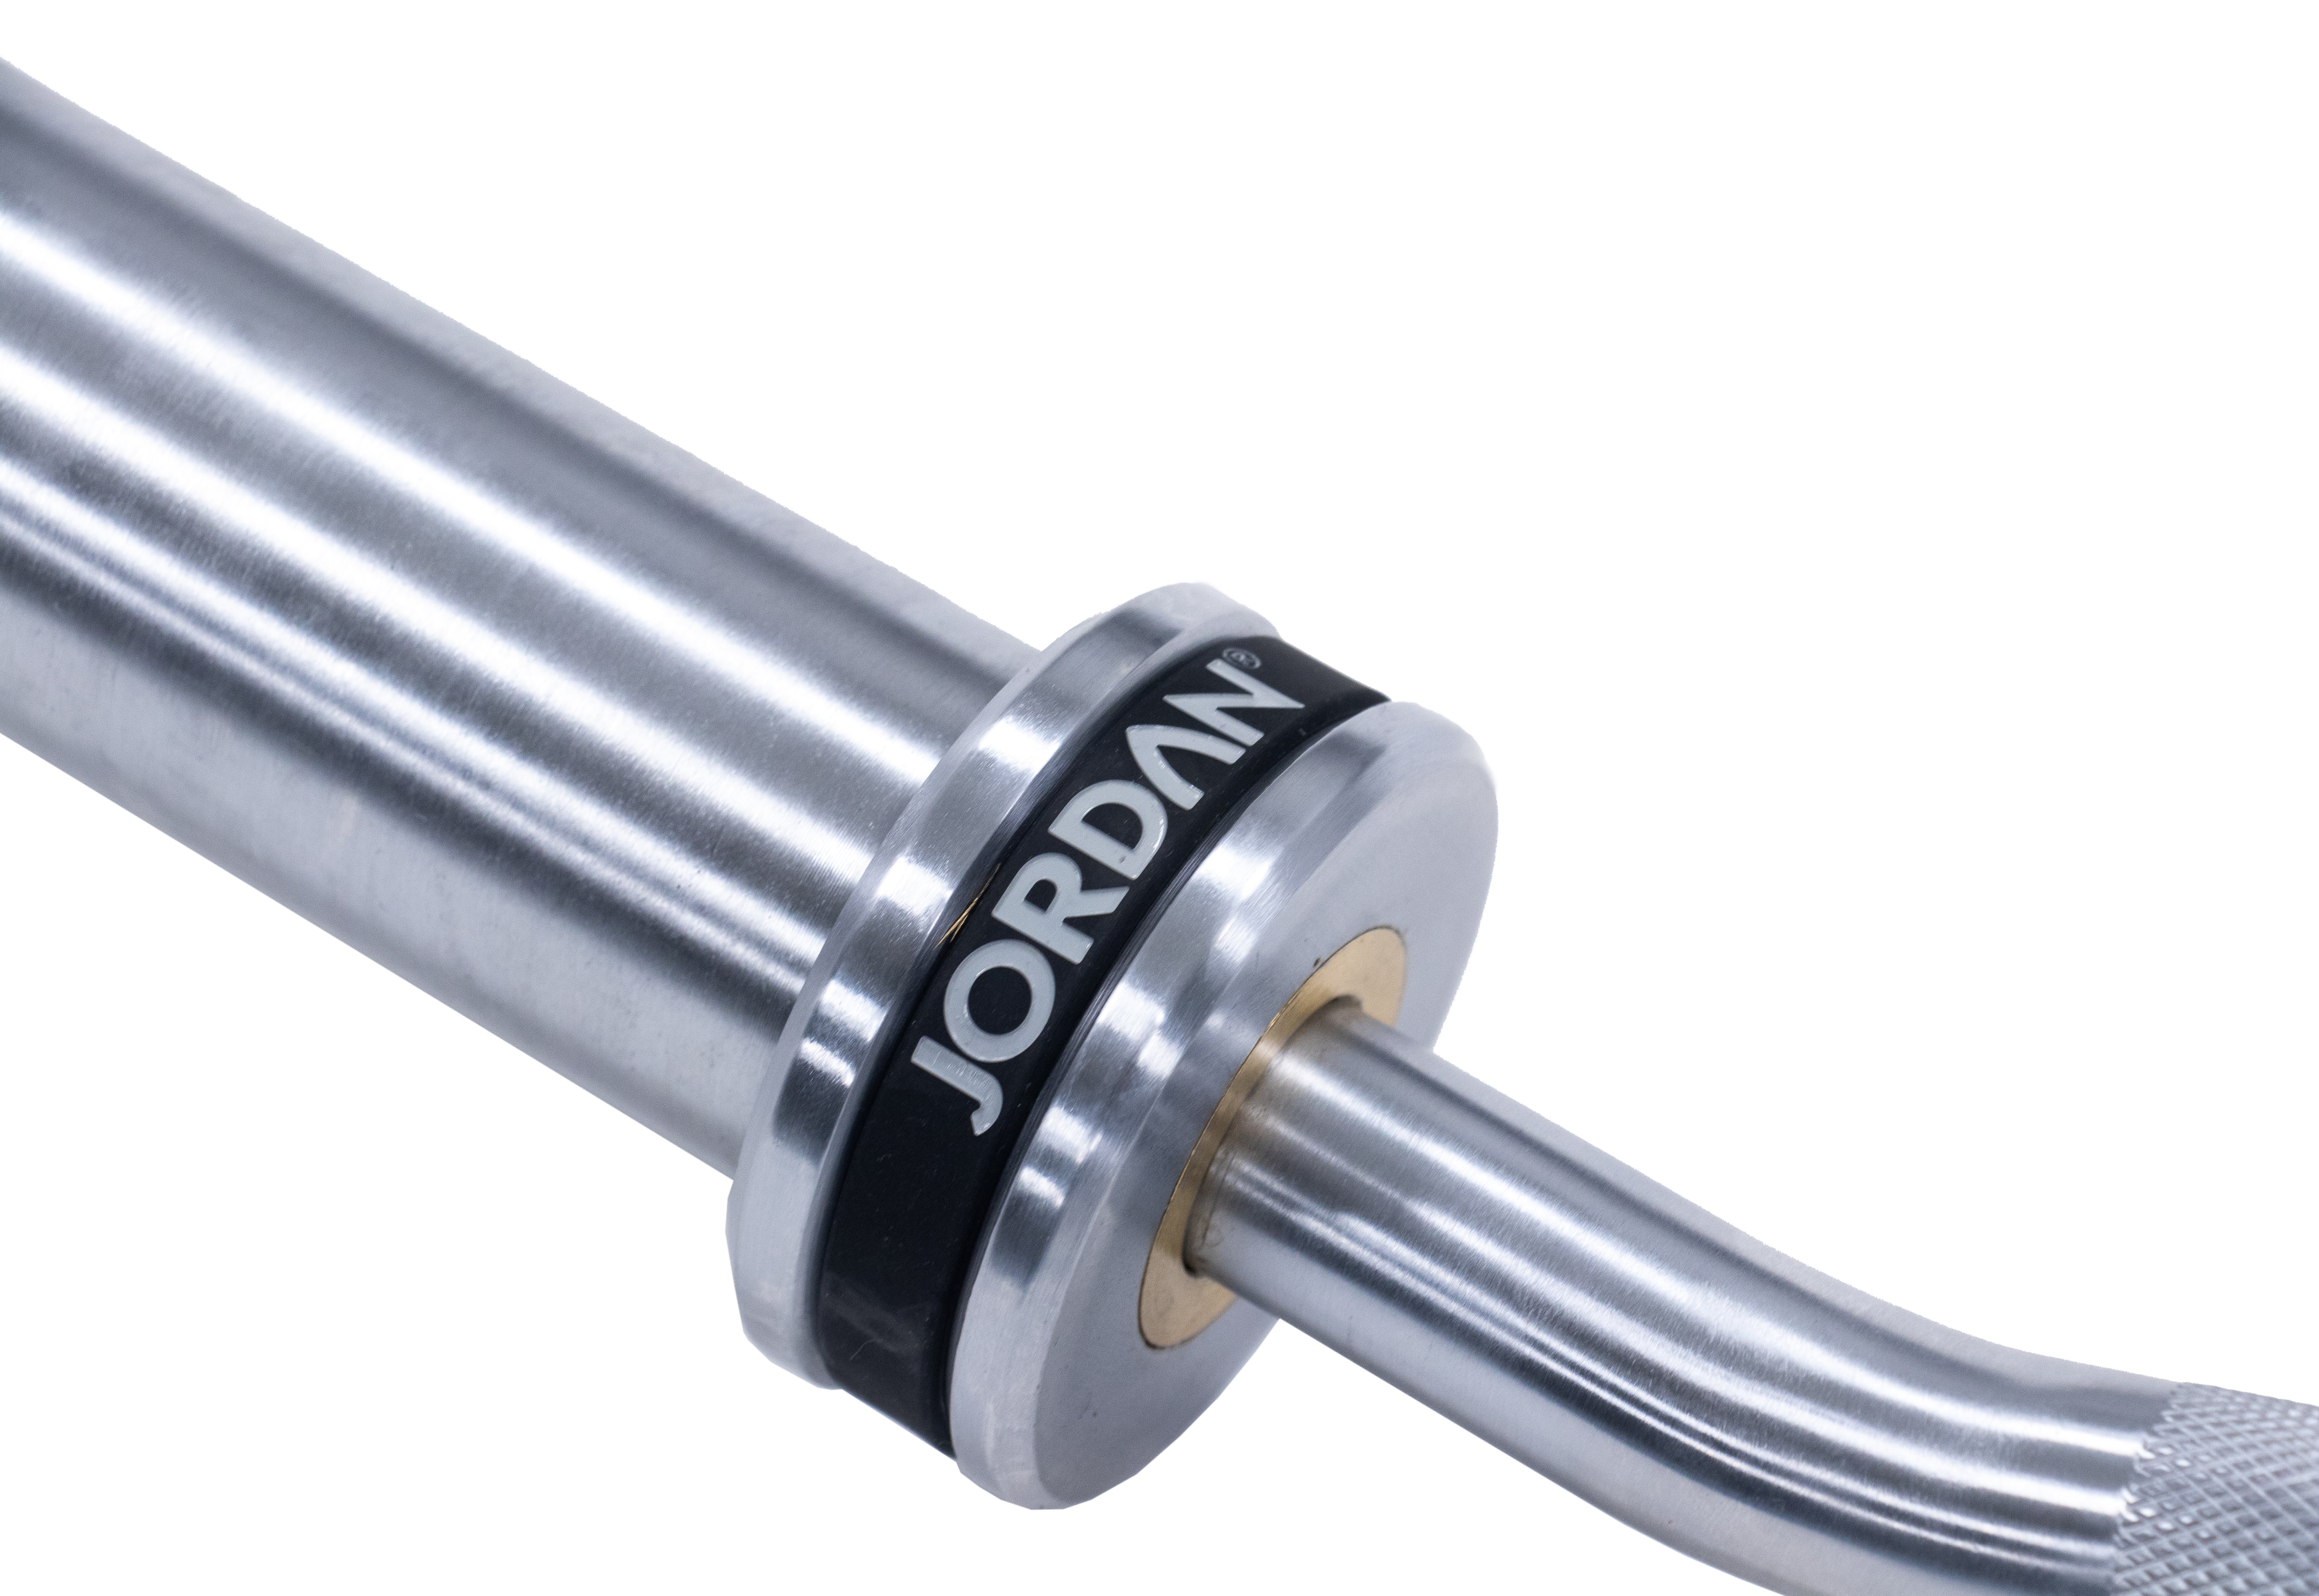 Jordan Steel Series Olympic EZ Curl Bar with bearings close up of bearings